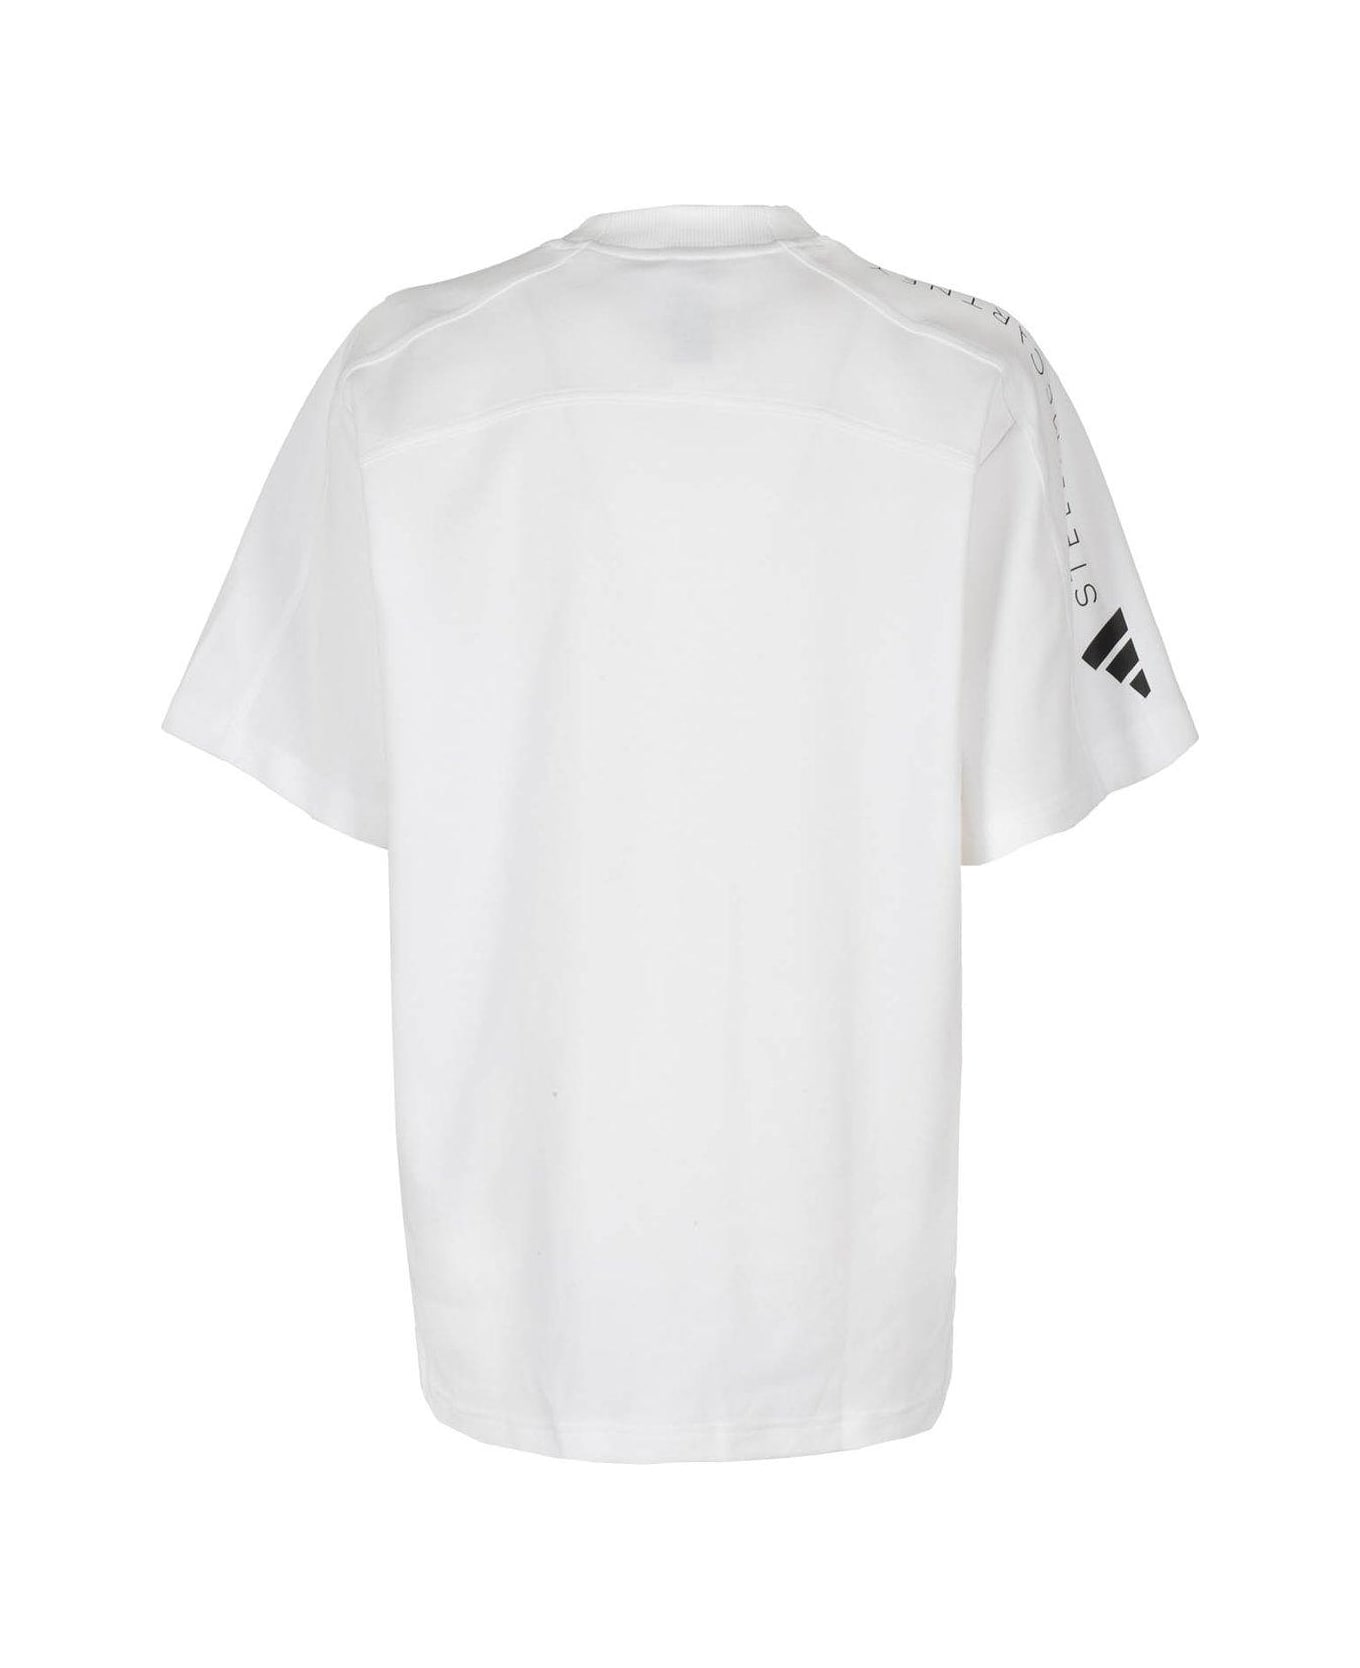 Adidas by Stella McCartney Logo T-shirt - WHITE